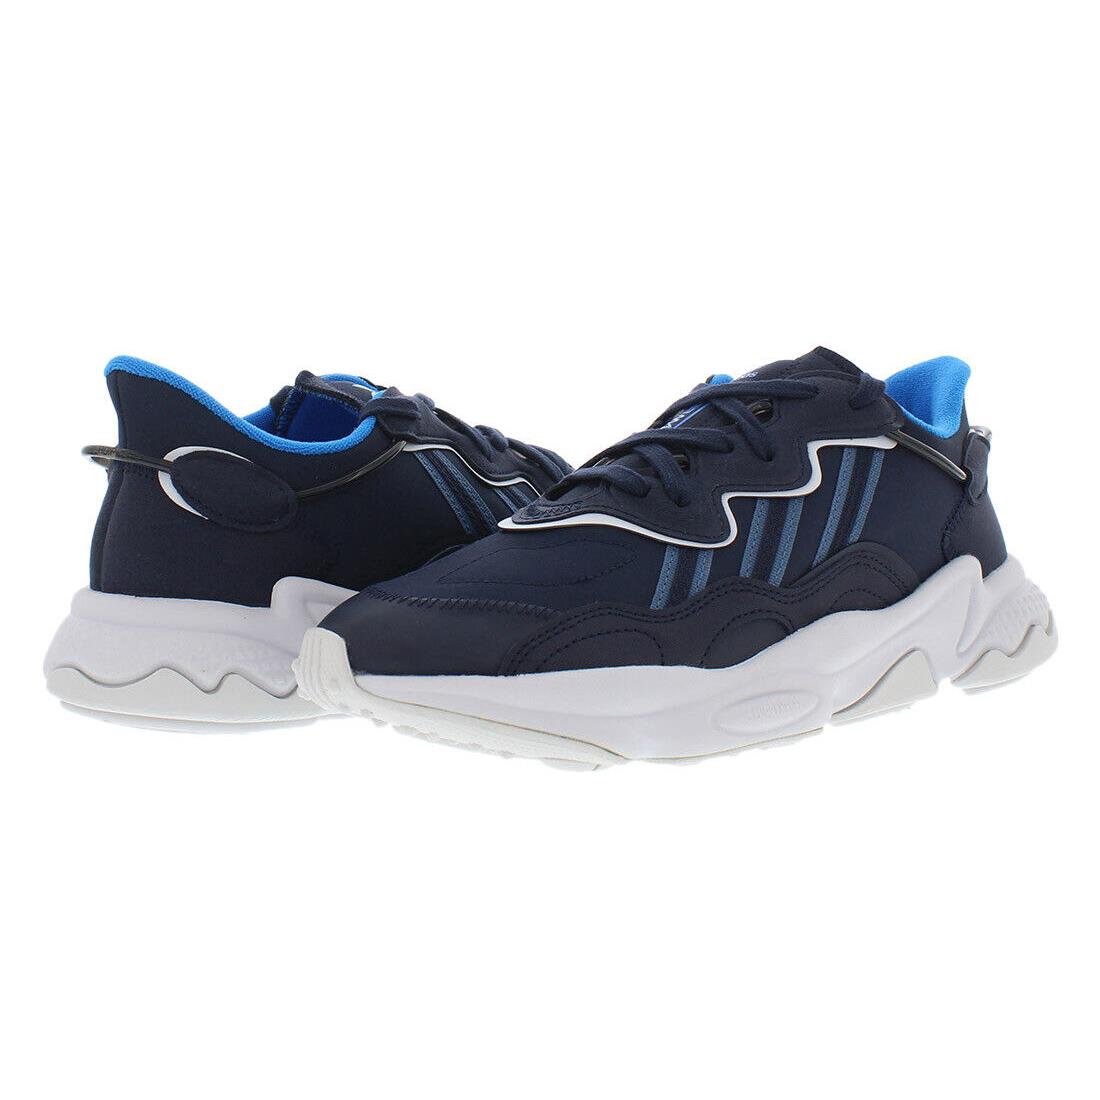 Adidas Ozweego Mens Shoes - Navy, Main: Blue